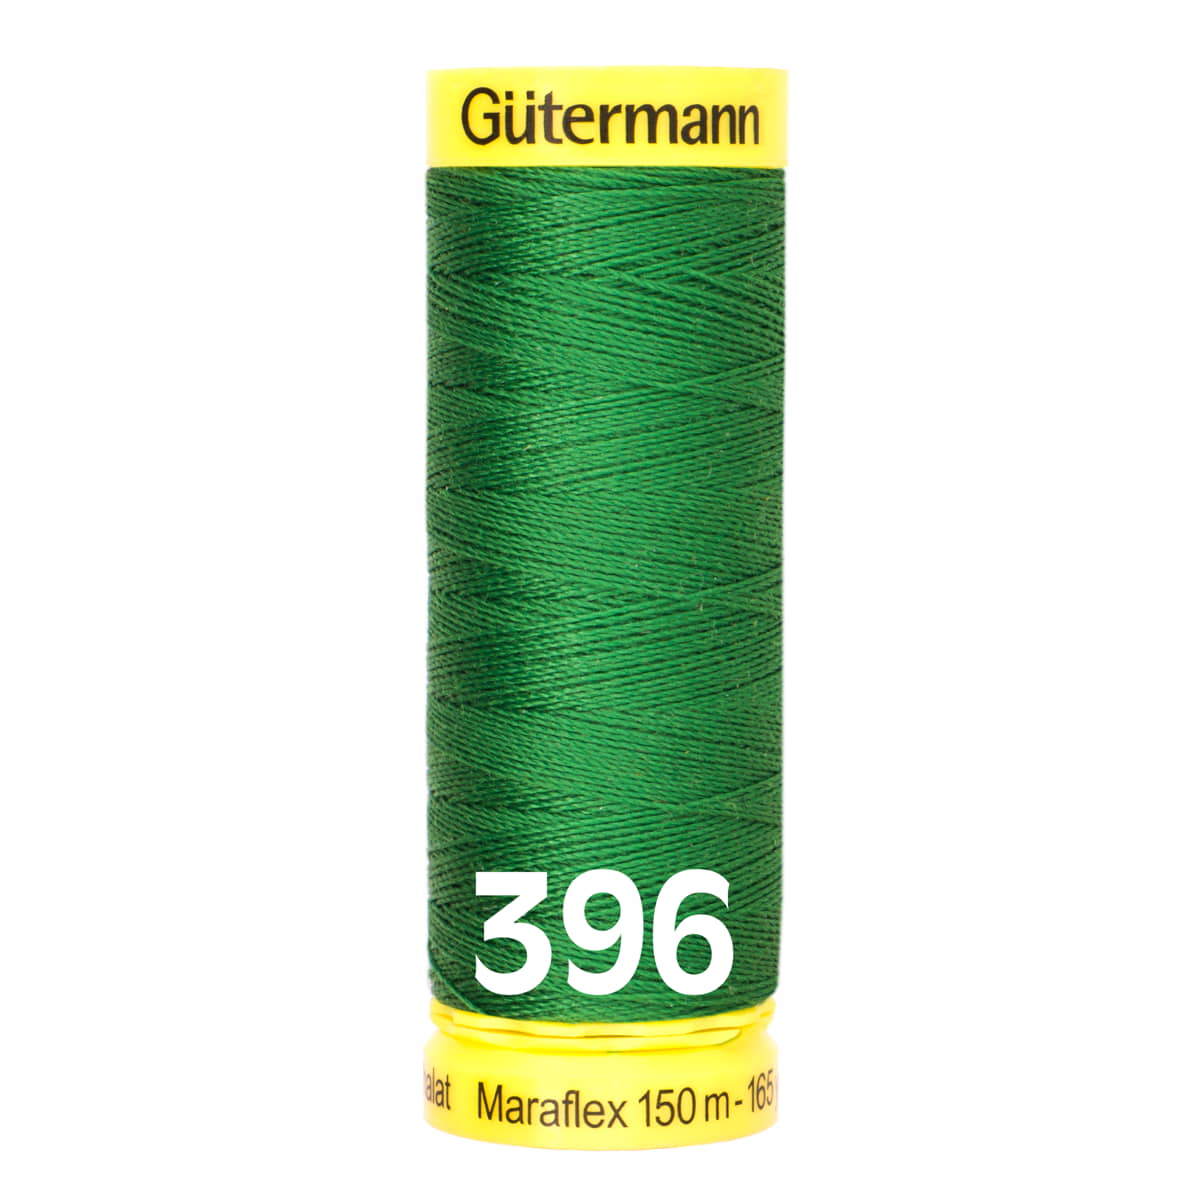 Gütermann MaraFlex 150m - 396 hard groen GUTERMANN-MARAFLEX-150-396 4029394998720 - Fourniturenkraam.nl